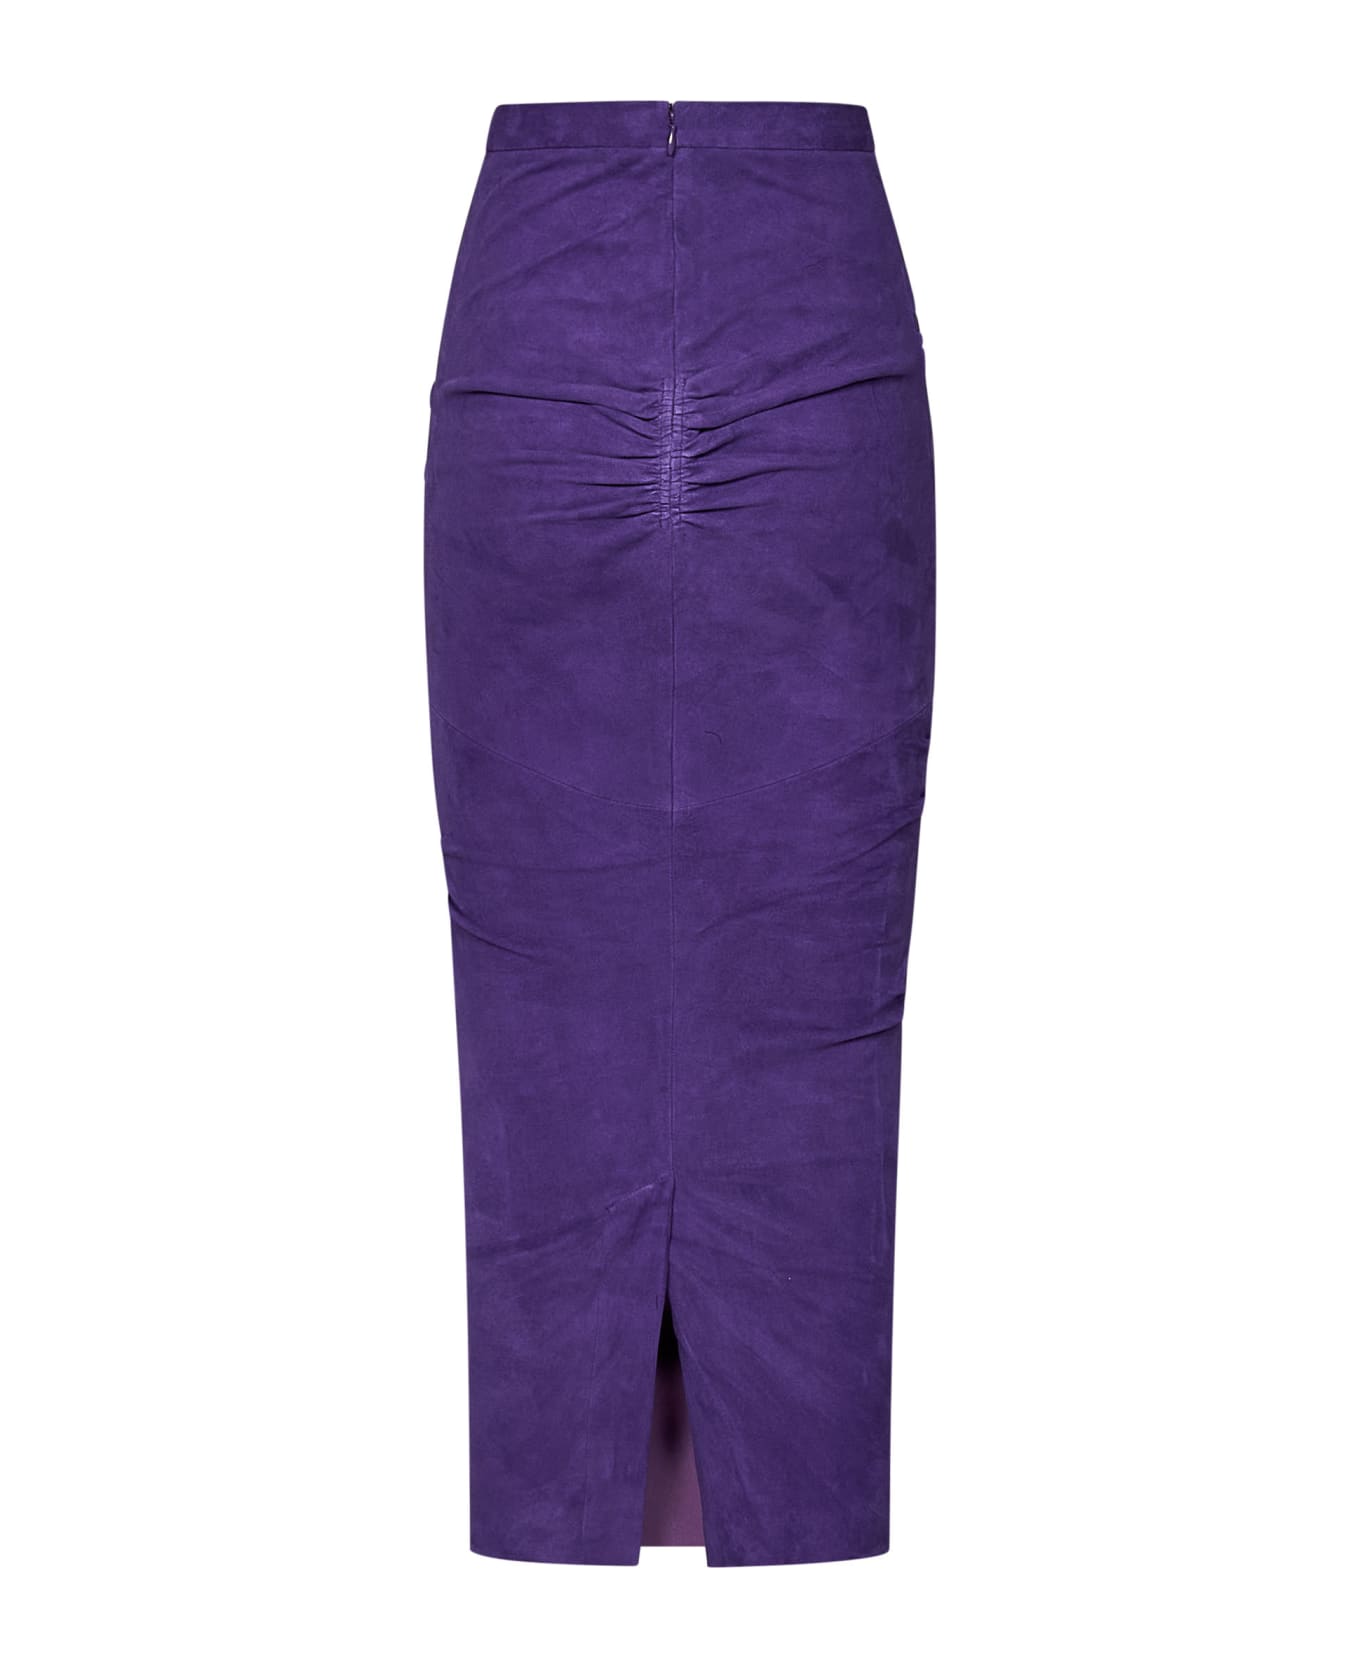 Laquan Smith Skirt - Purple